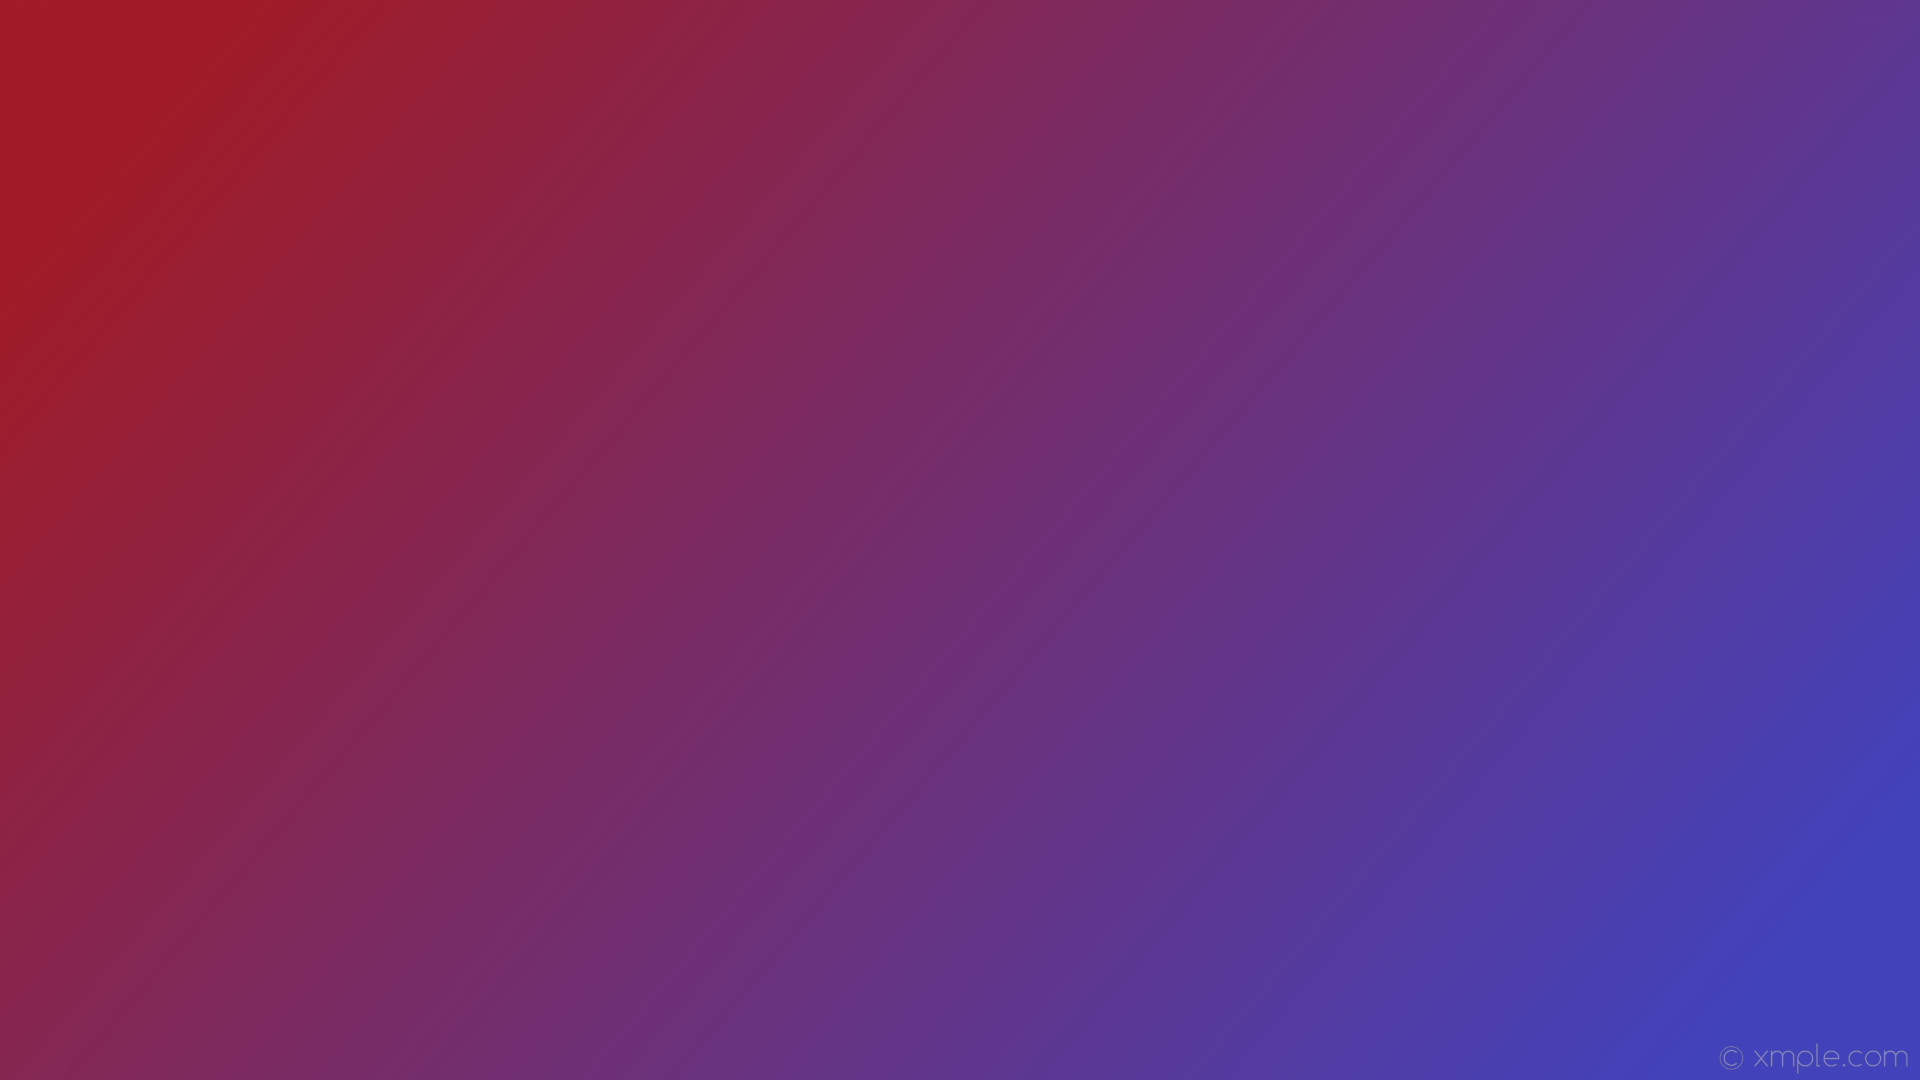 1920x1080 wallpaper red blue linear gradient #a01b26 #4242bb 165Â°